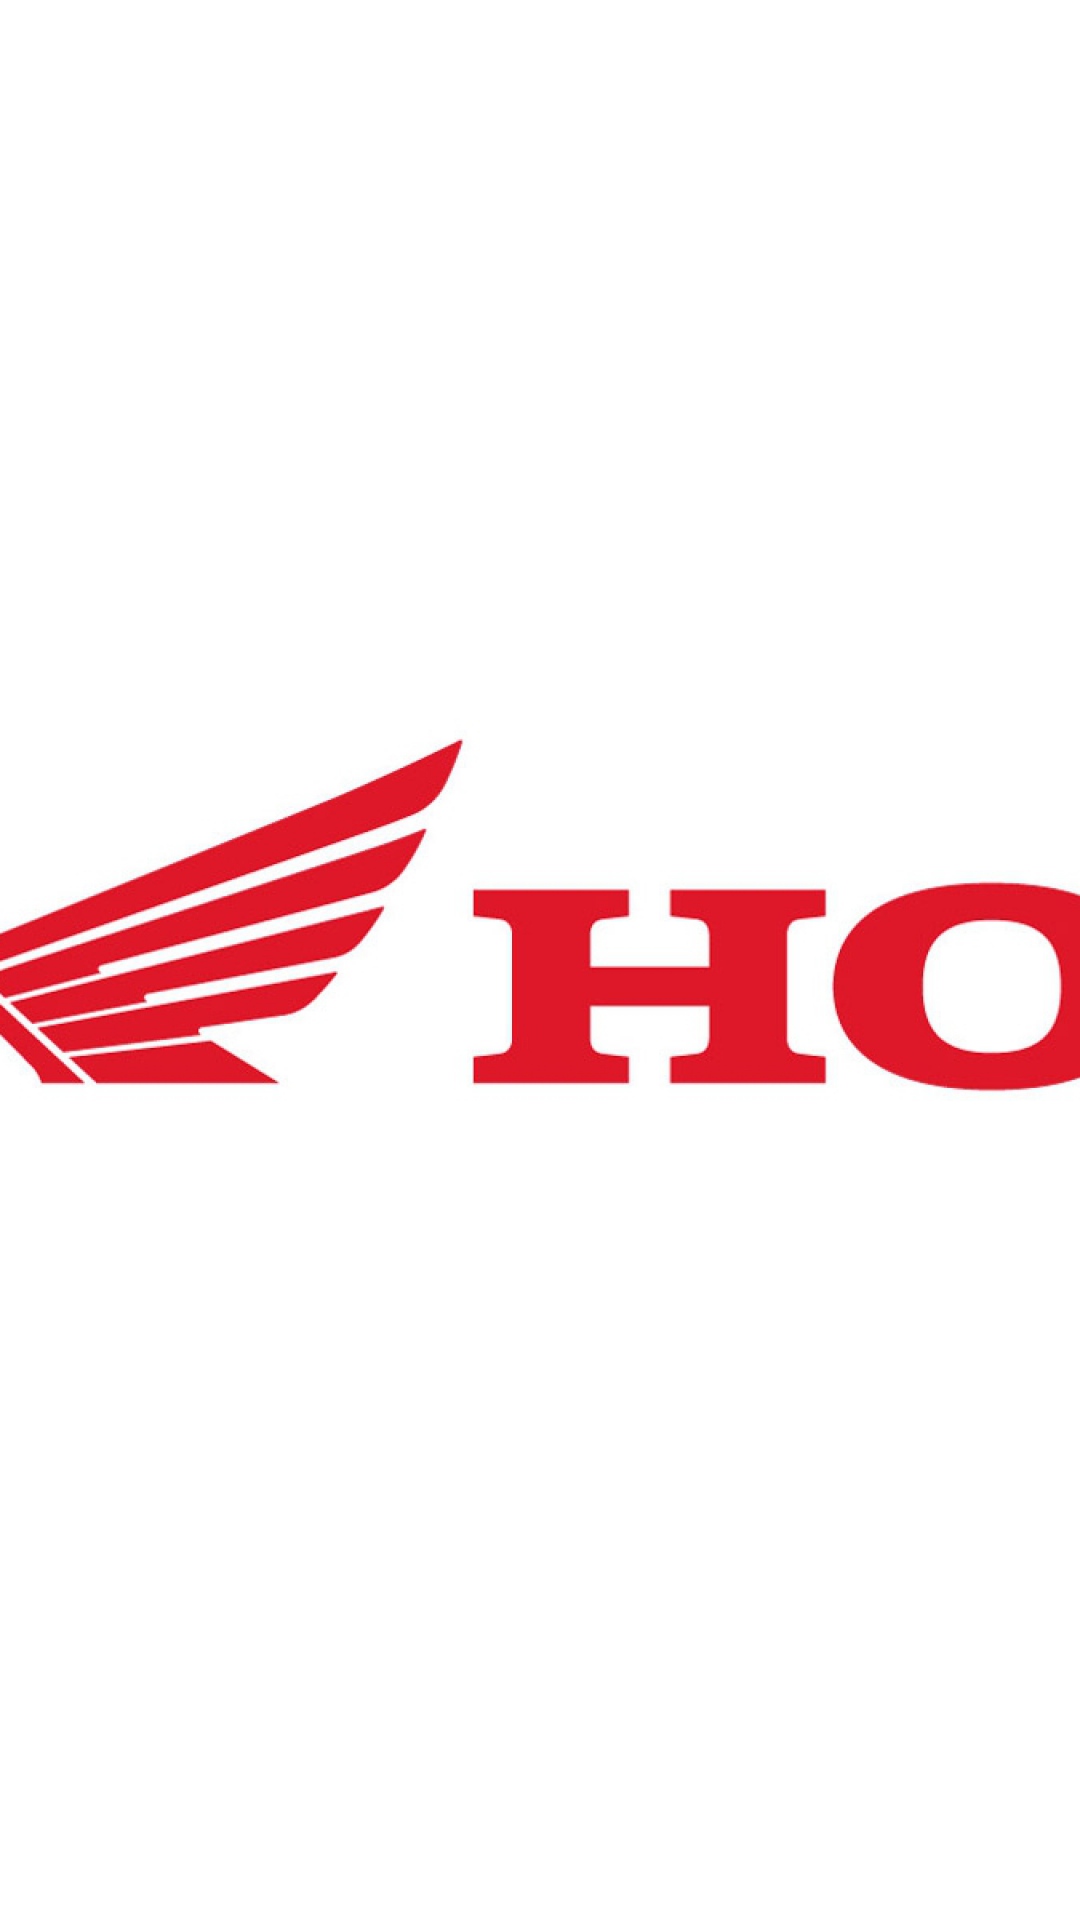 Honda Motorcycle Logo Wallpaper Iphone